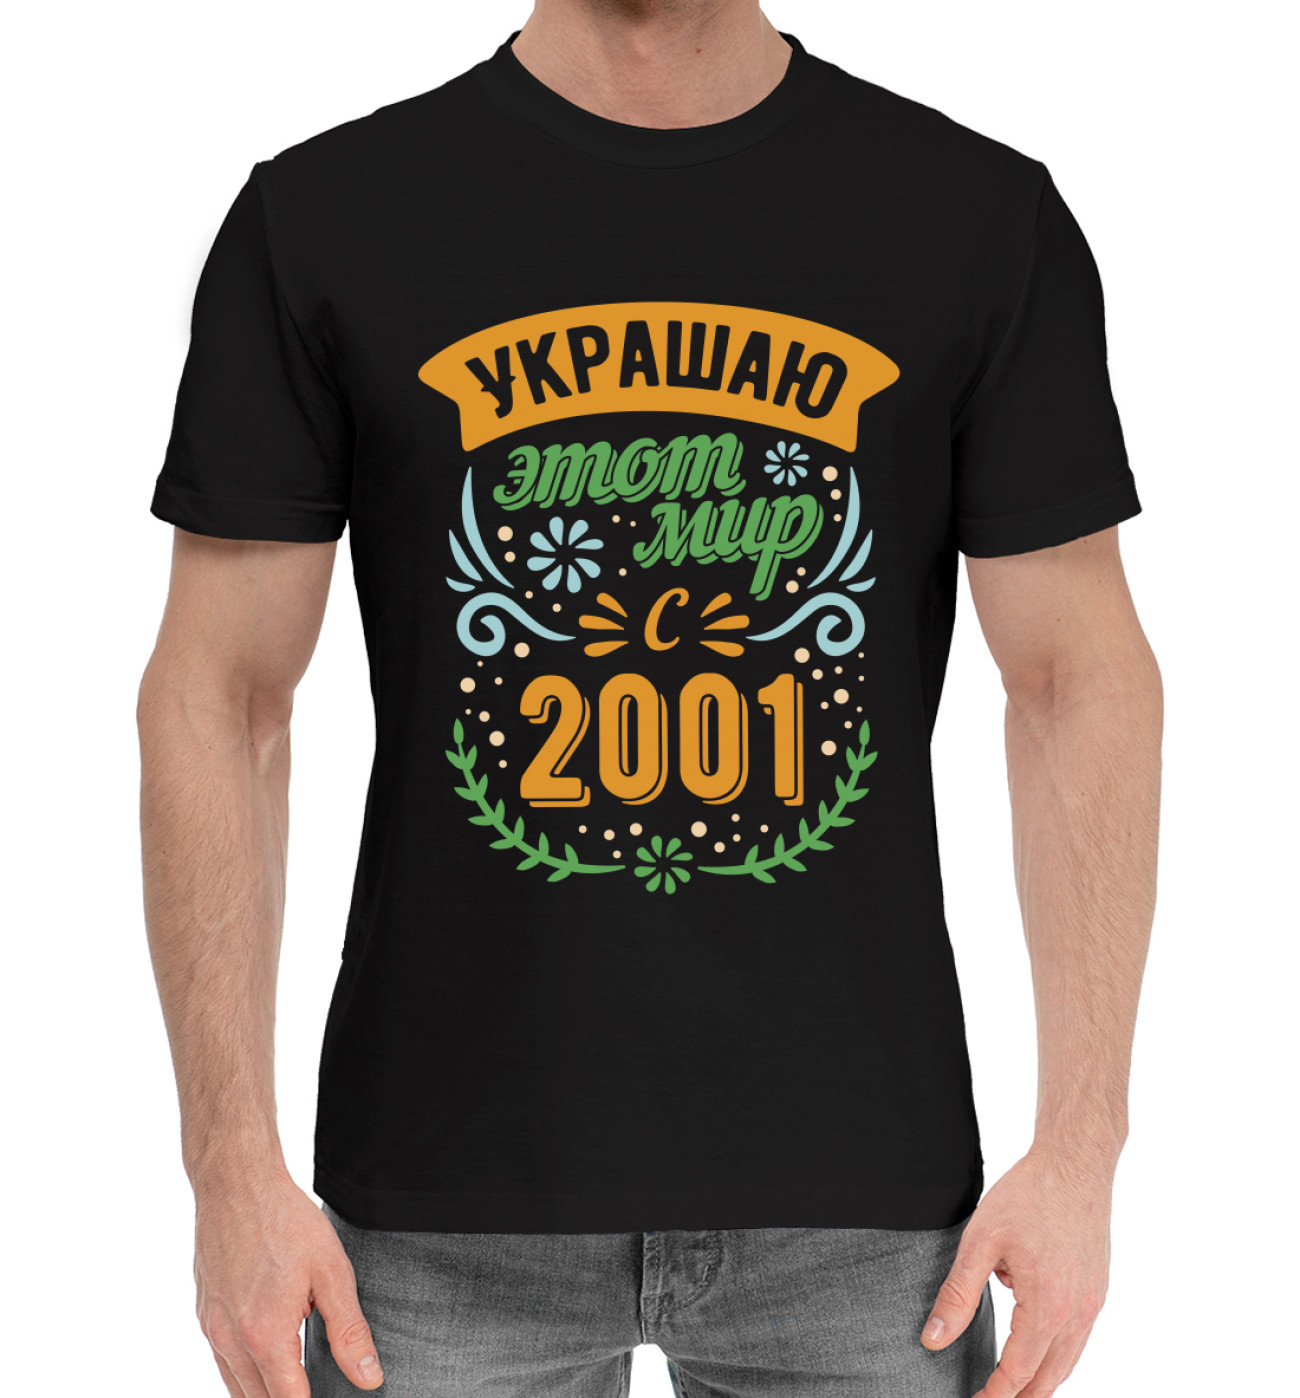 Мужская Хлопковая футболка 2001, артикул: D01-140630-hfu-2